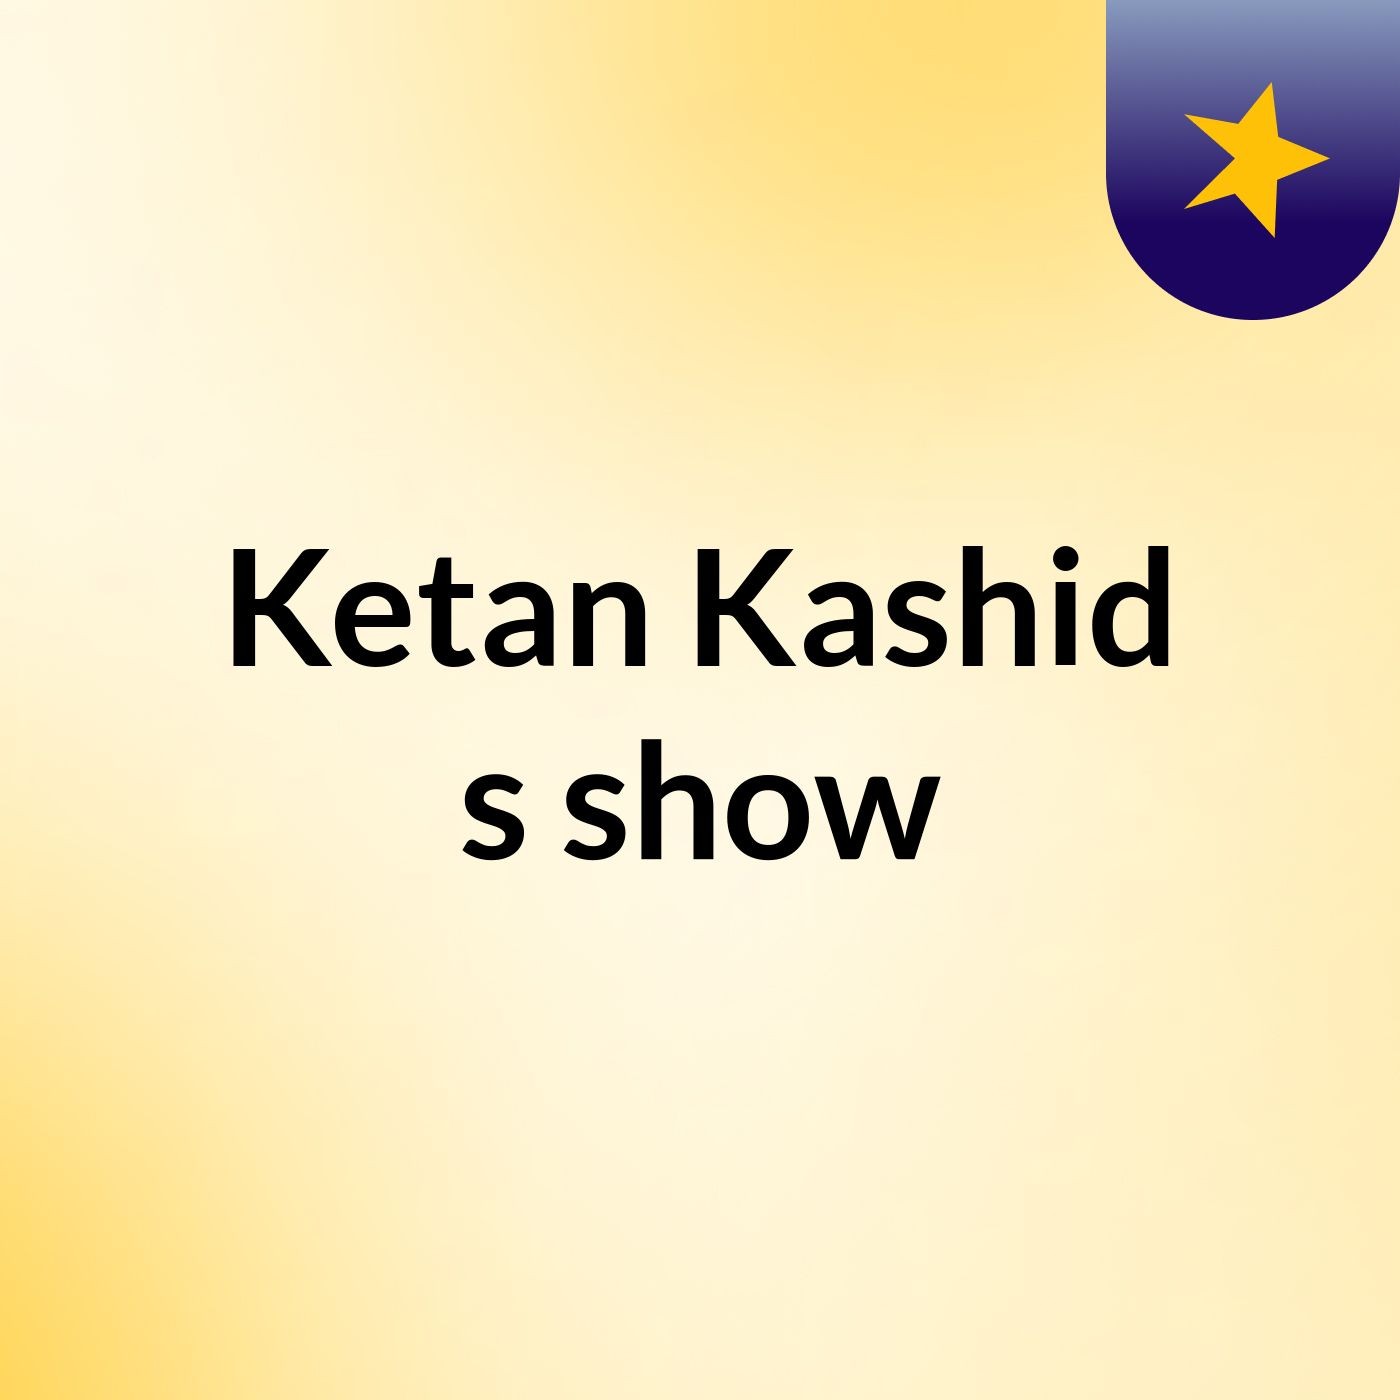 Ketan Kashid's show